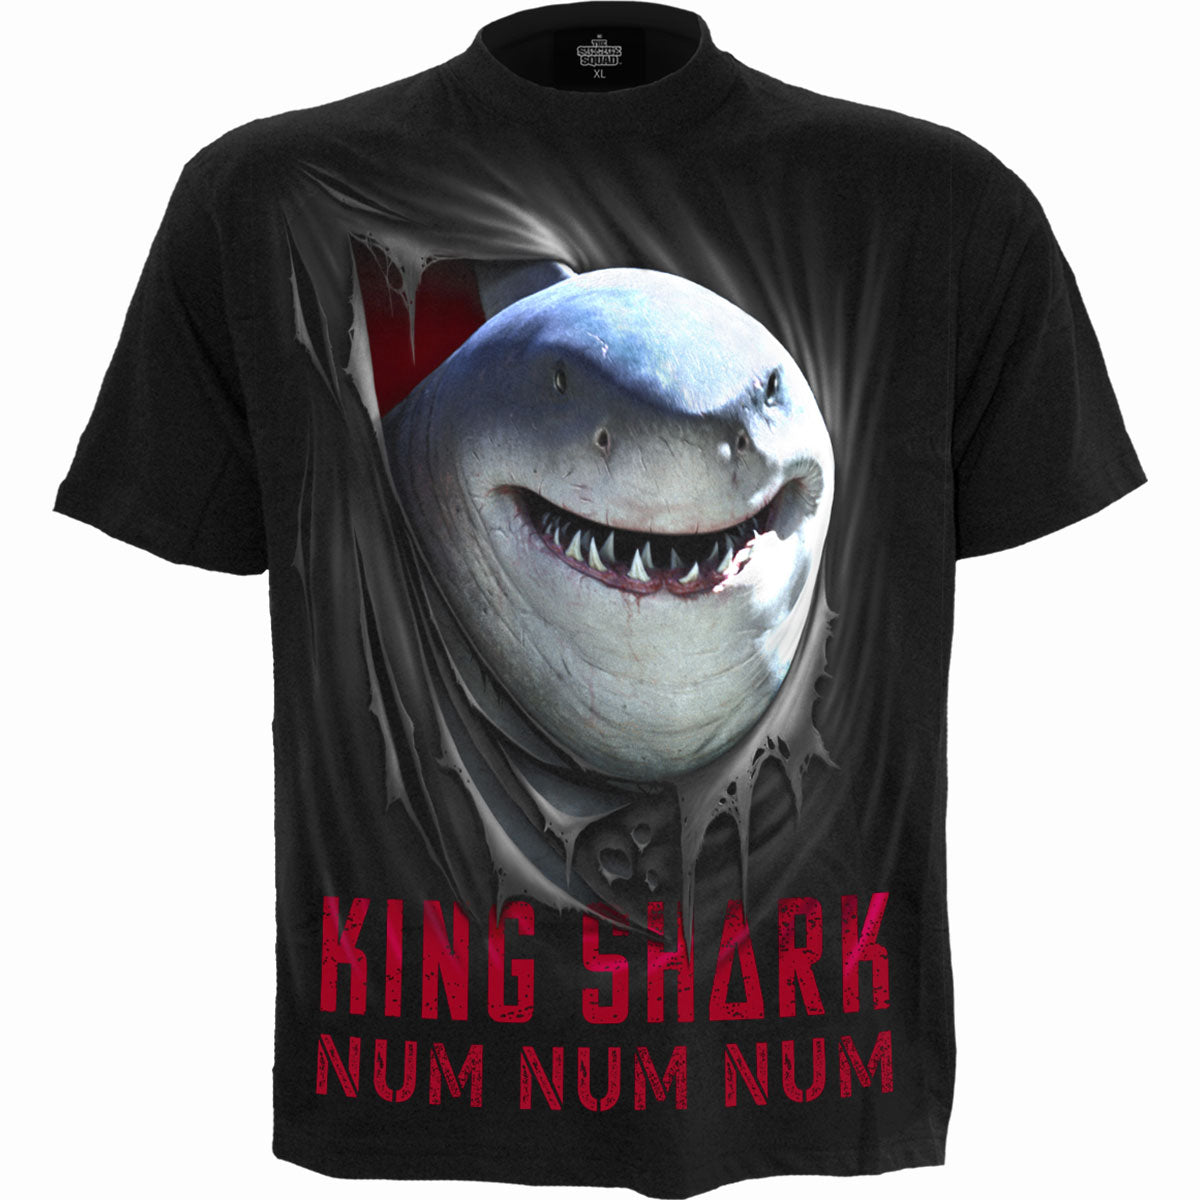 KING SHARK - NUM NUM NUM - T-Shirt Black